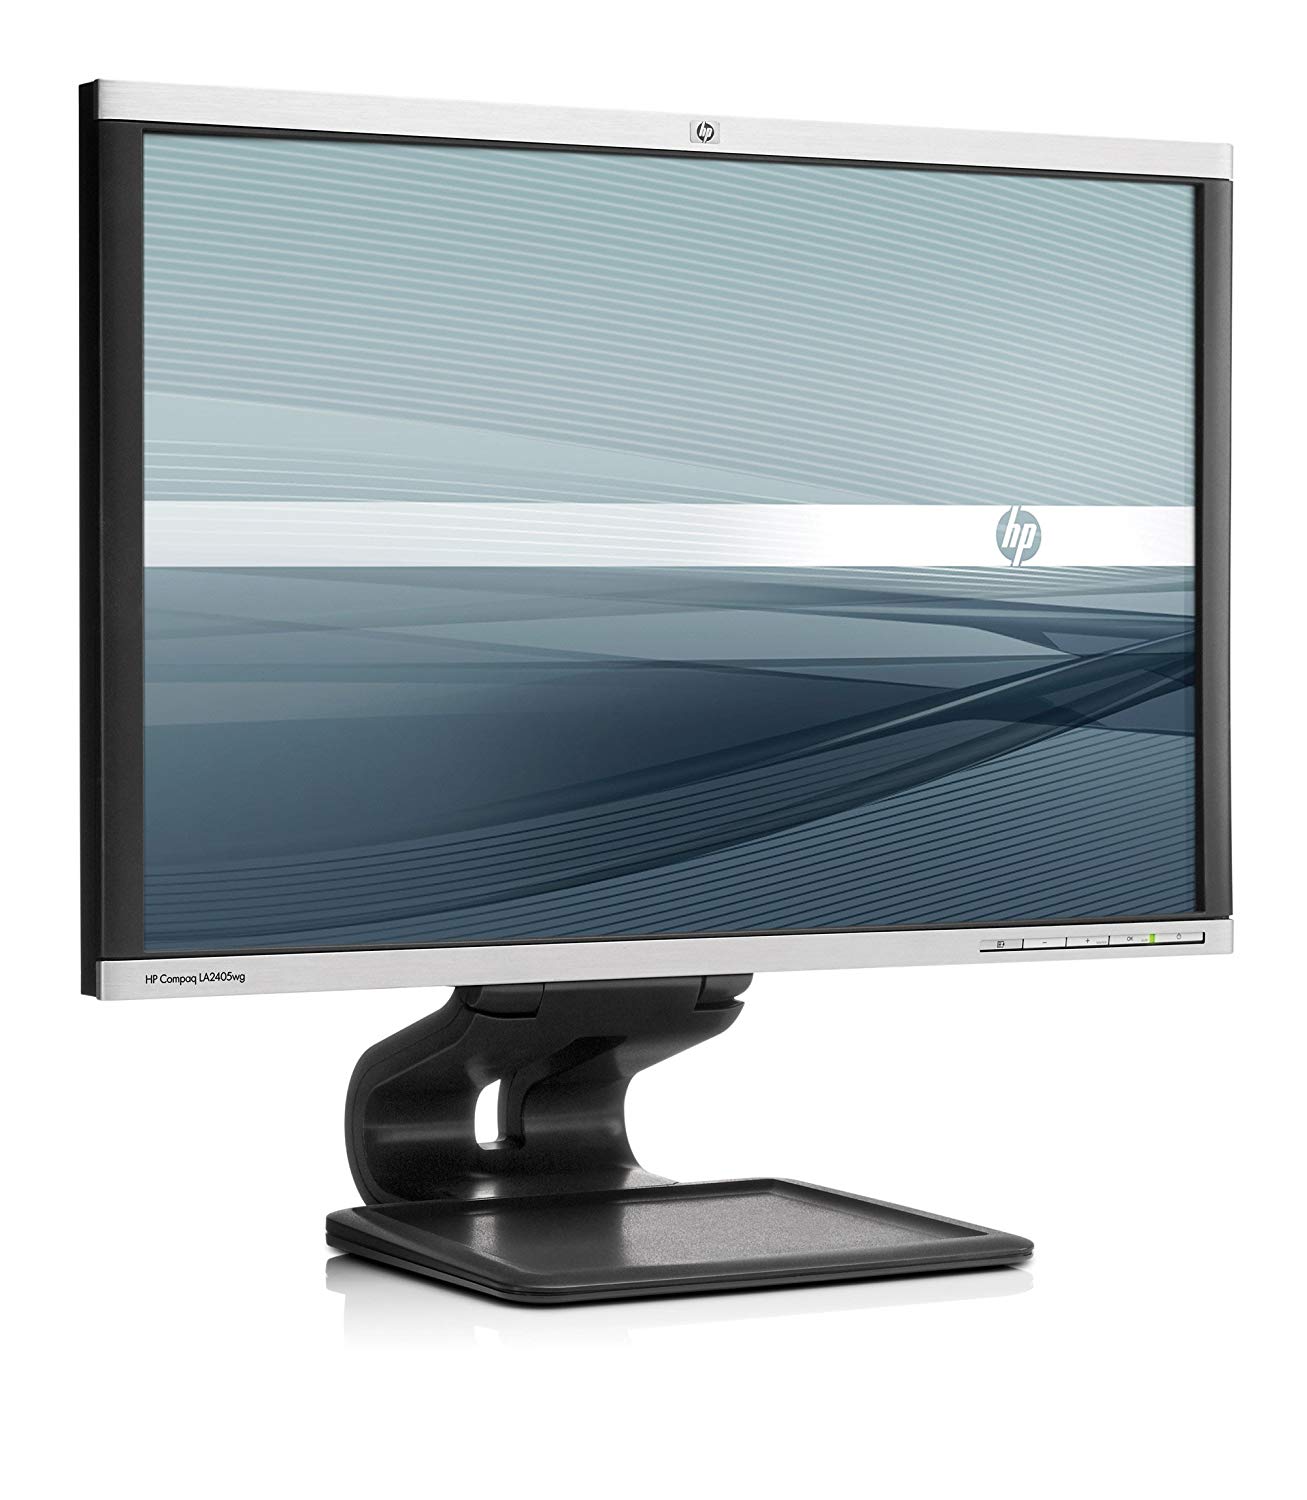 Monitor HP LA2405-WG 24"